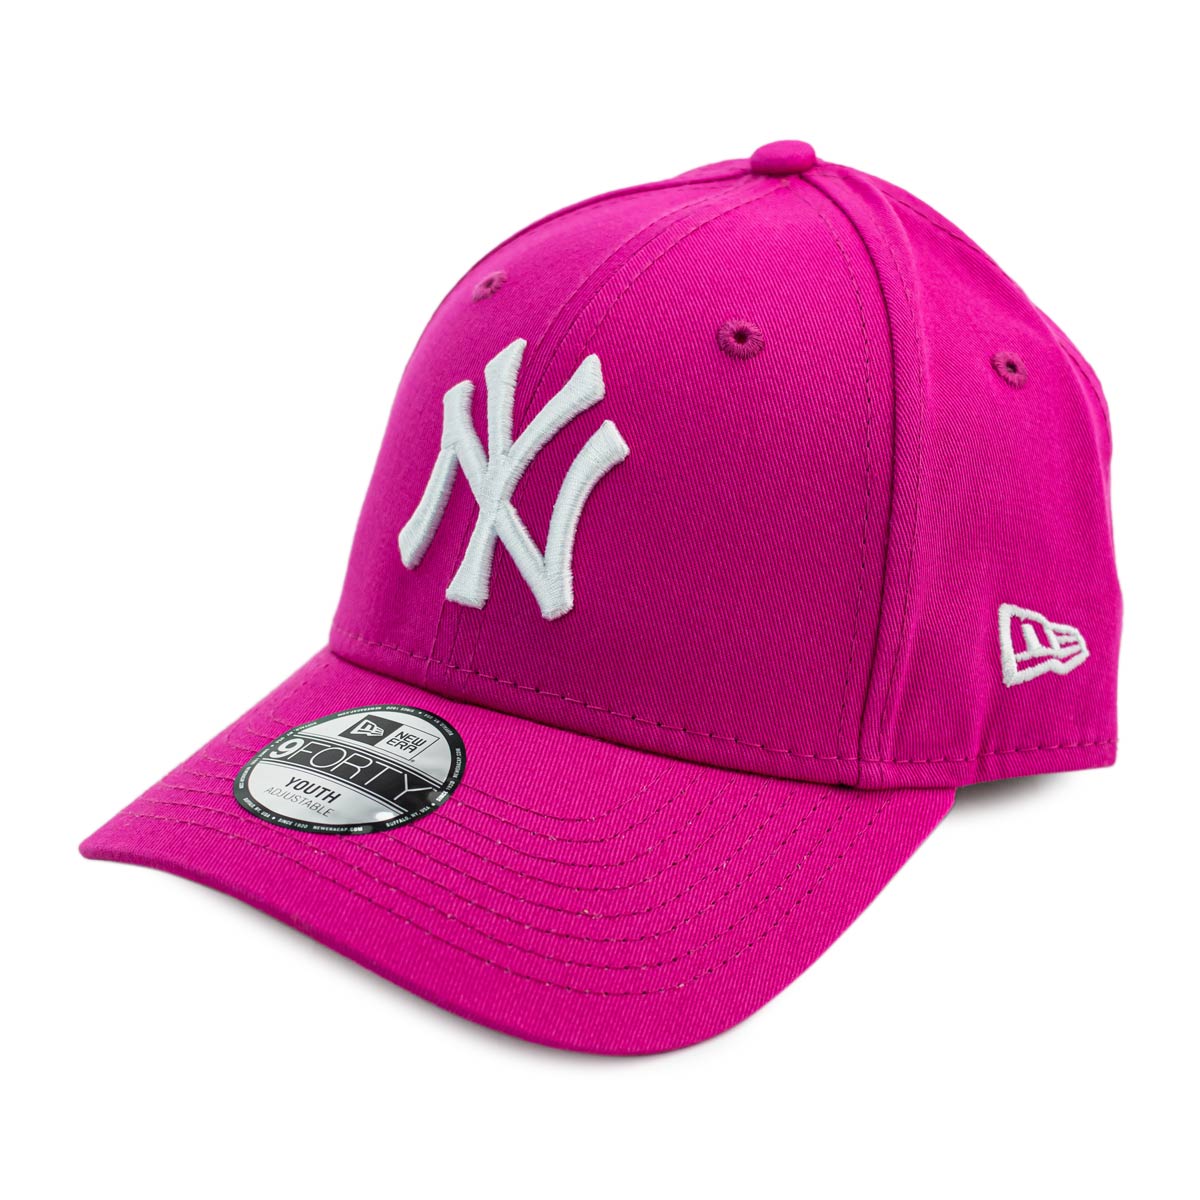 New Era Youth 940 New York Yankees MLB League Basic Cap 10877284 Youth/Pink-